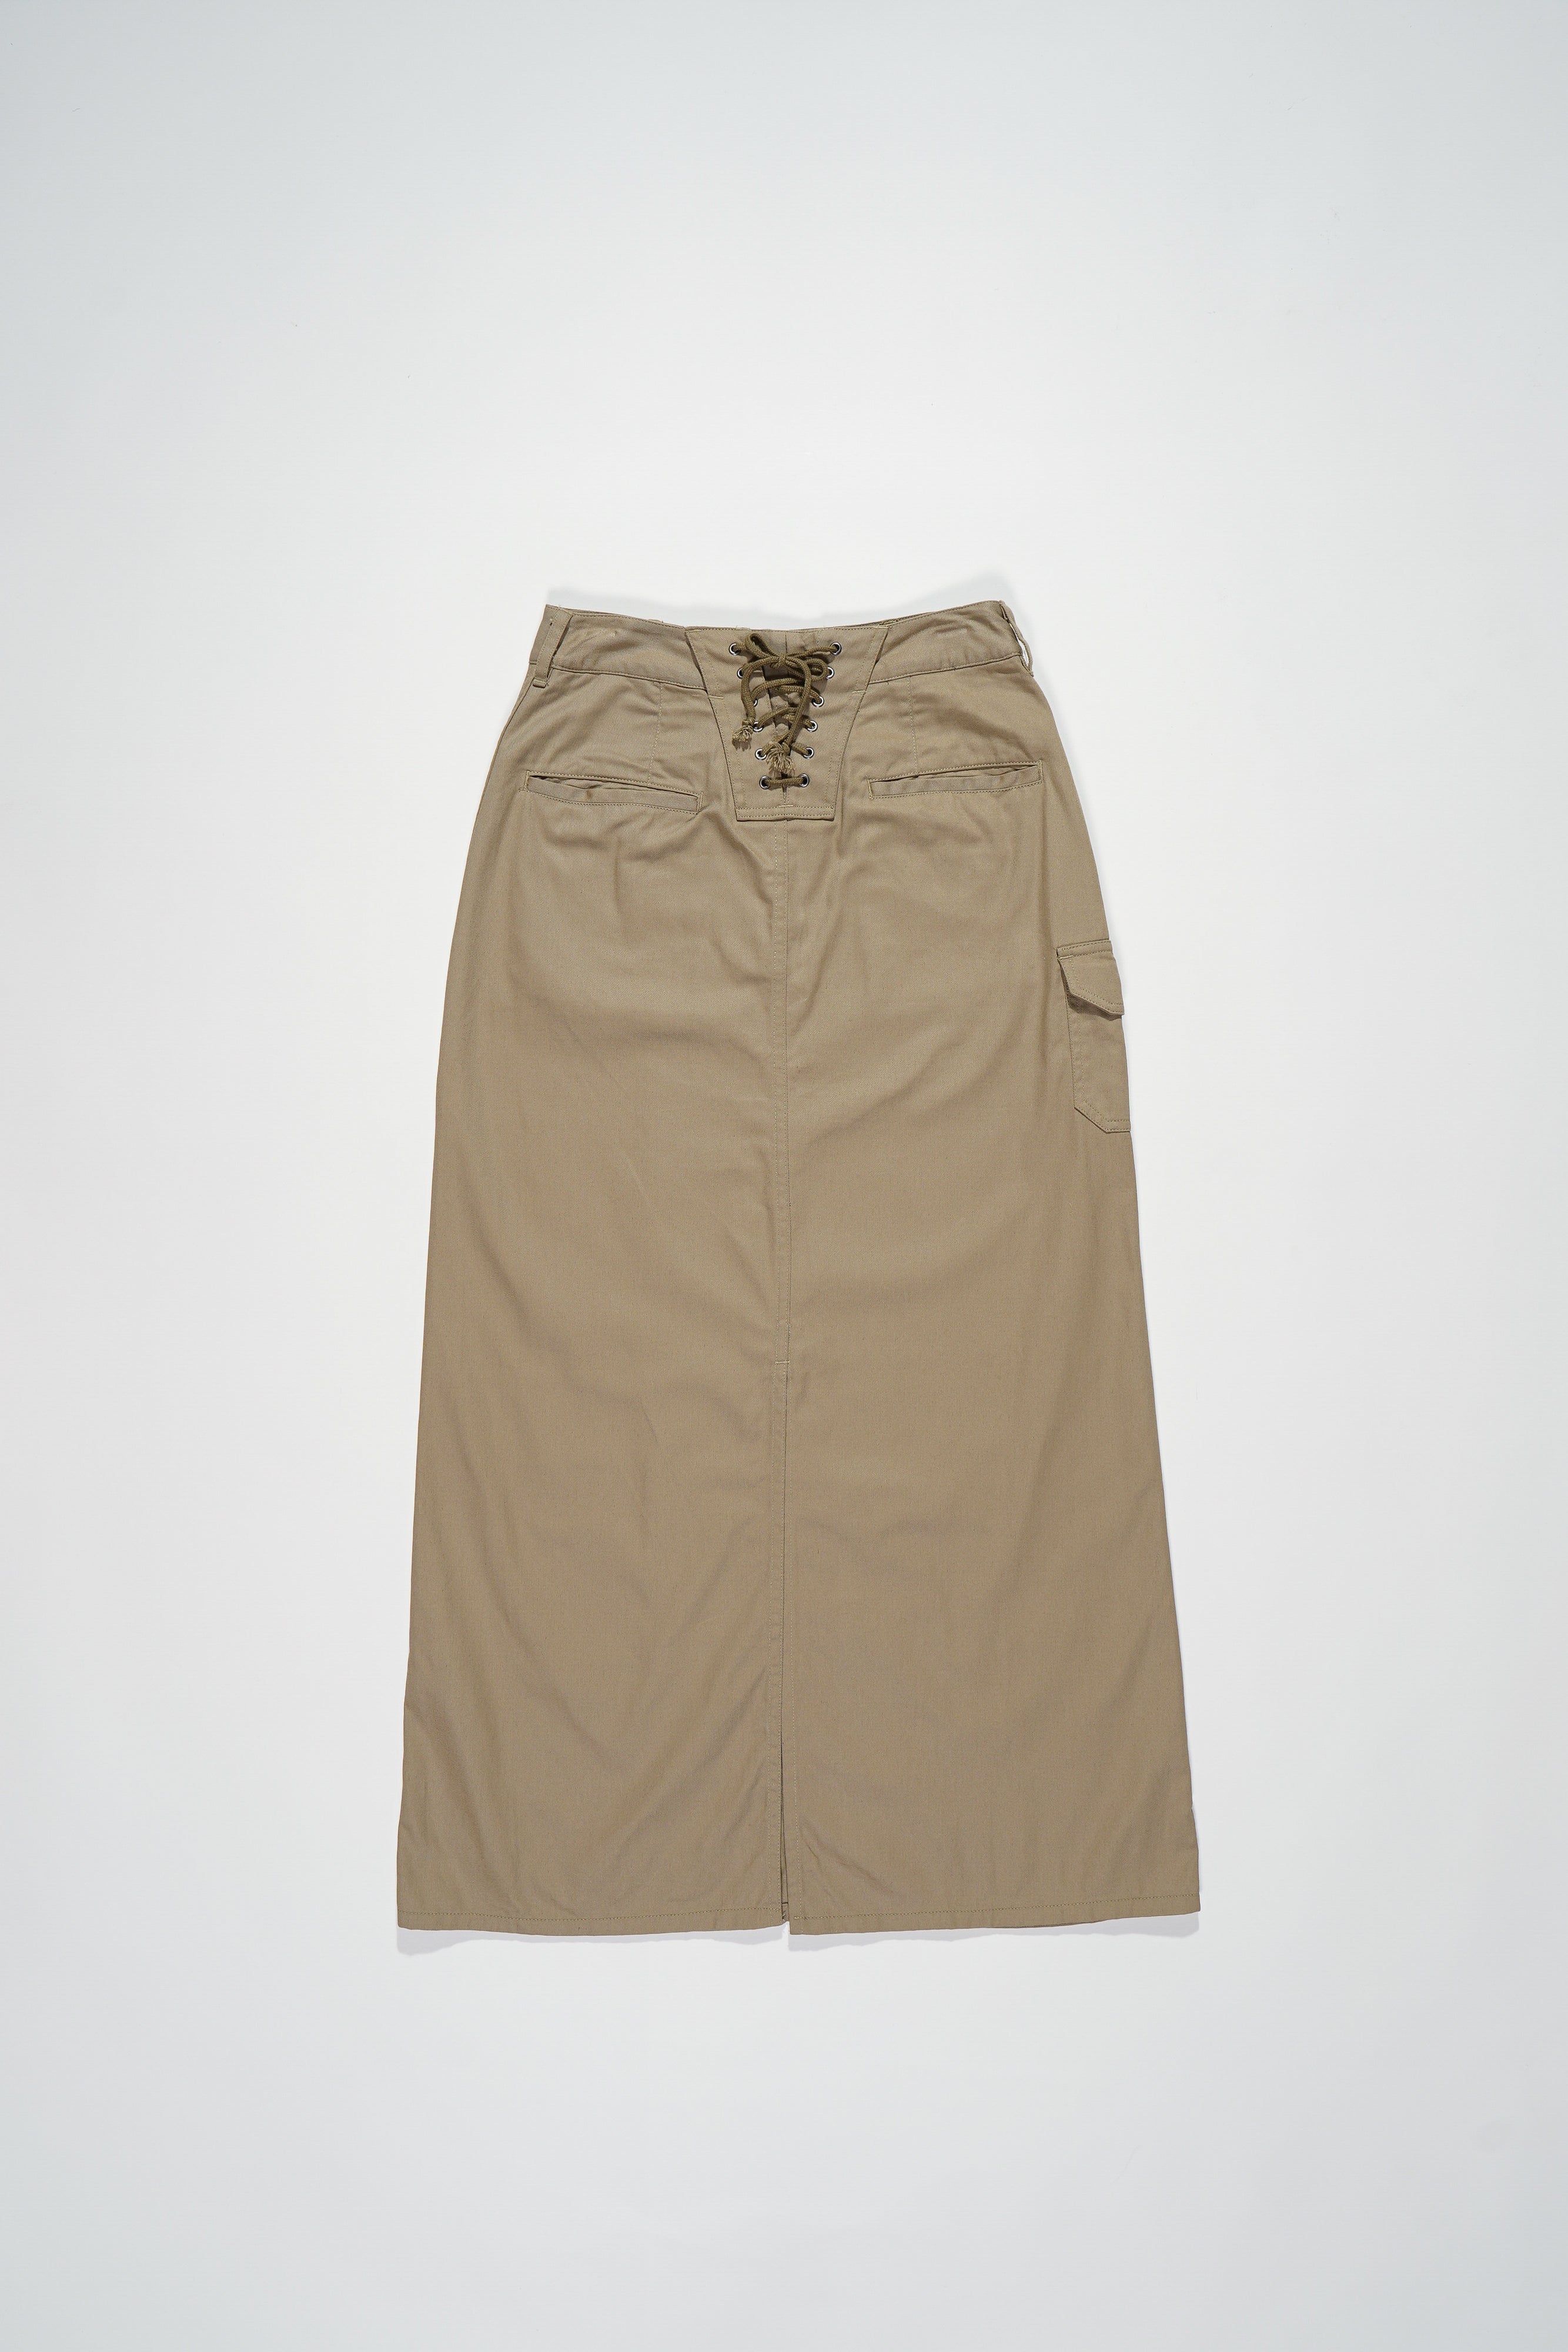 Engineered Garments Blank Label Lace Up Skirt - Khaki 6.5oz Flat Twill